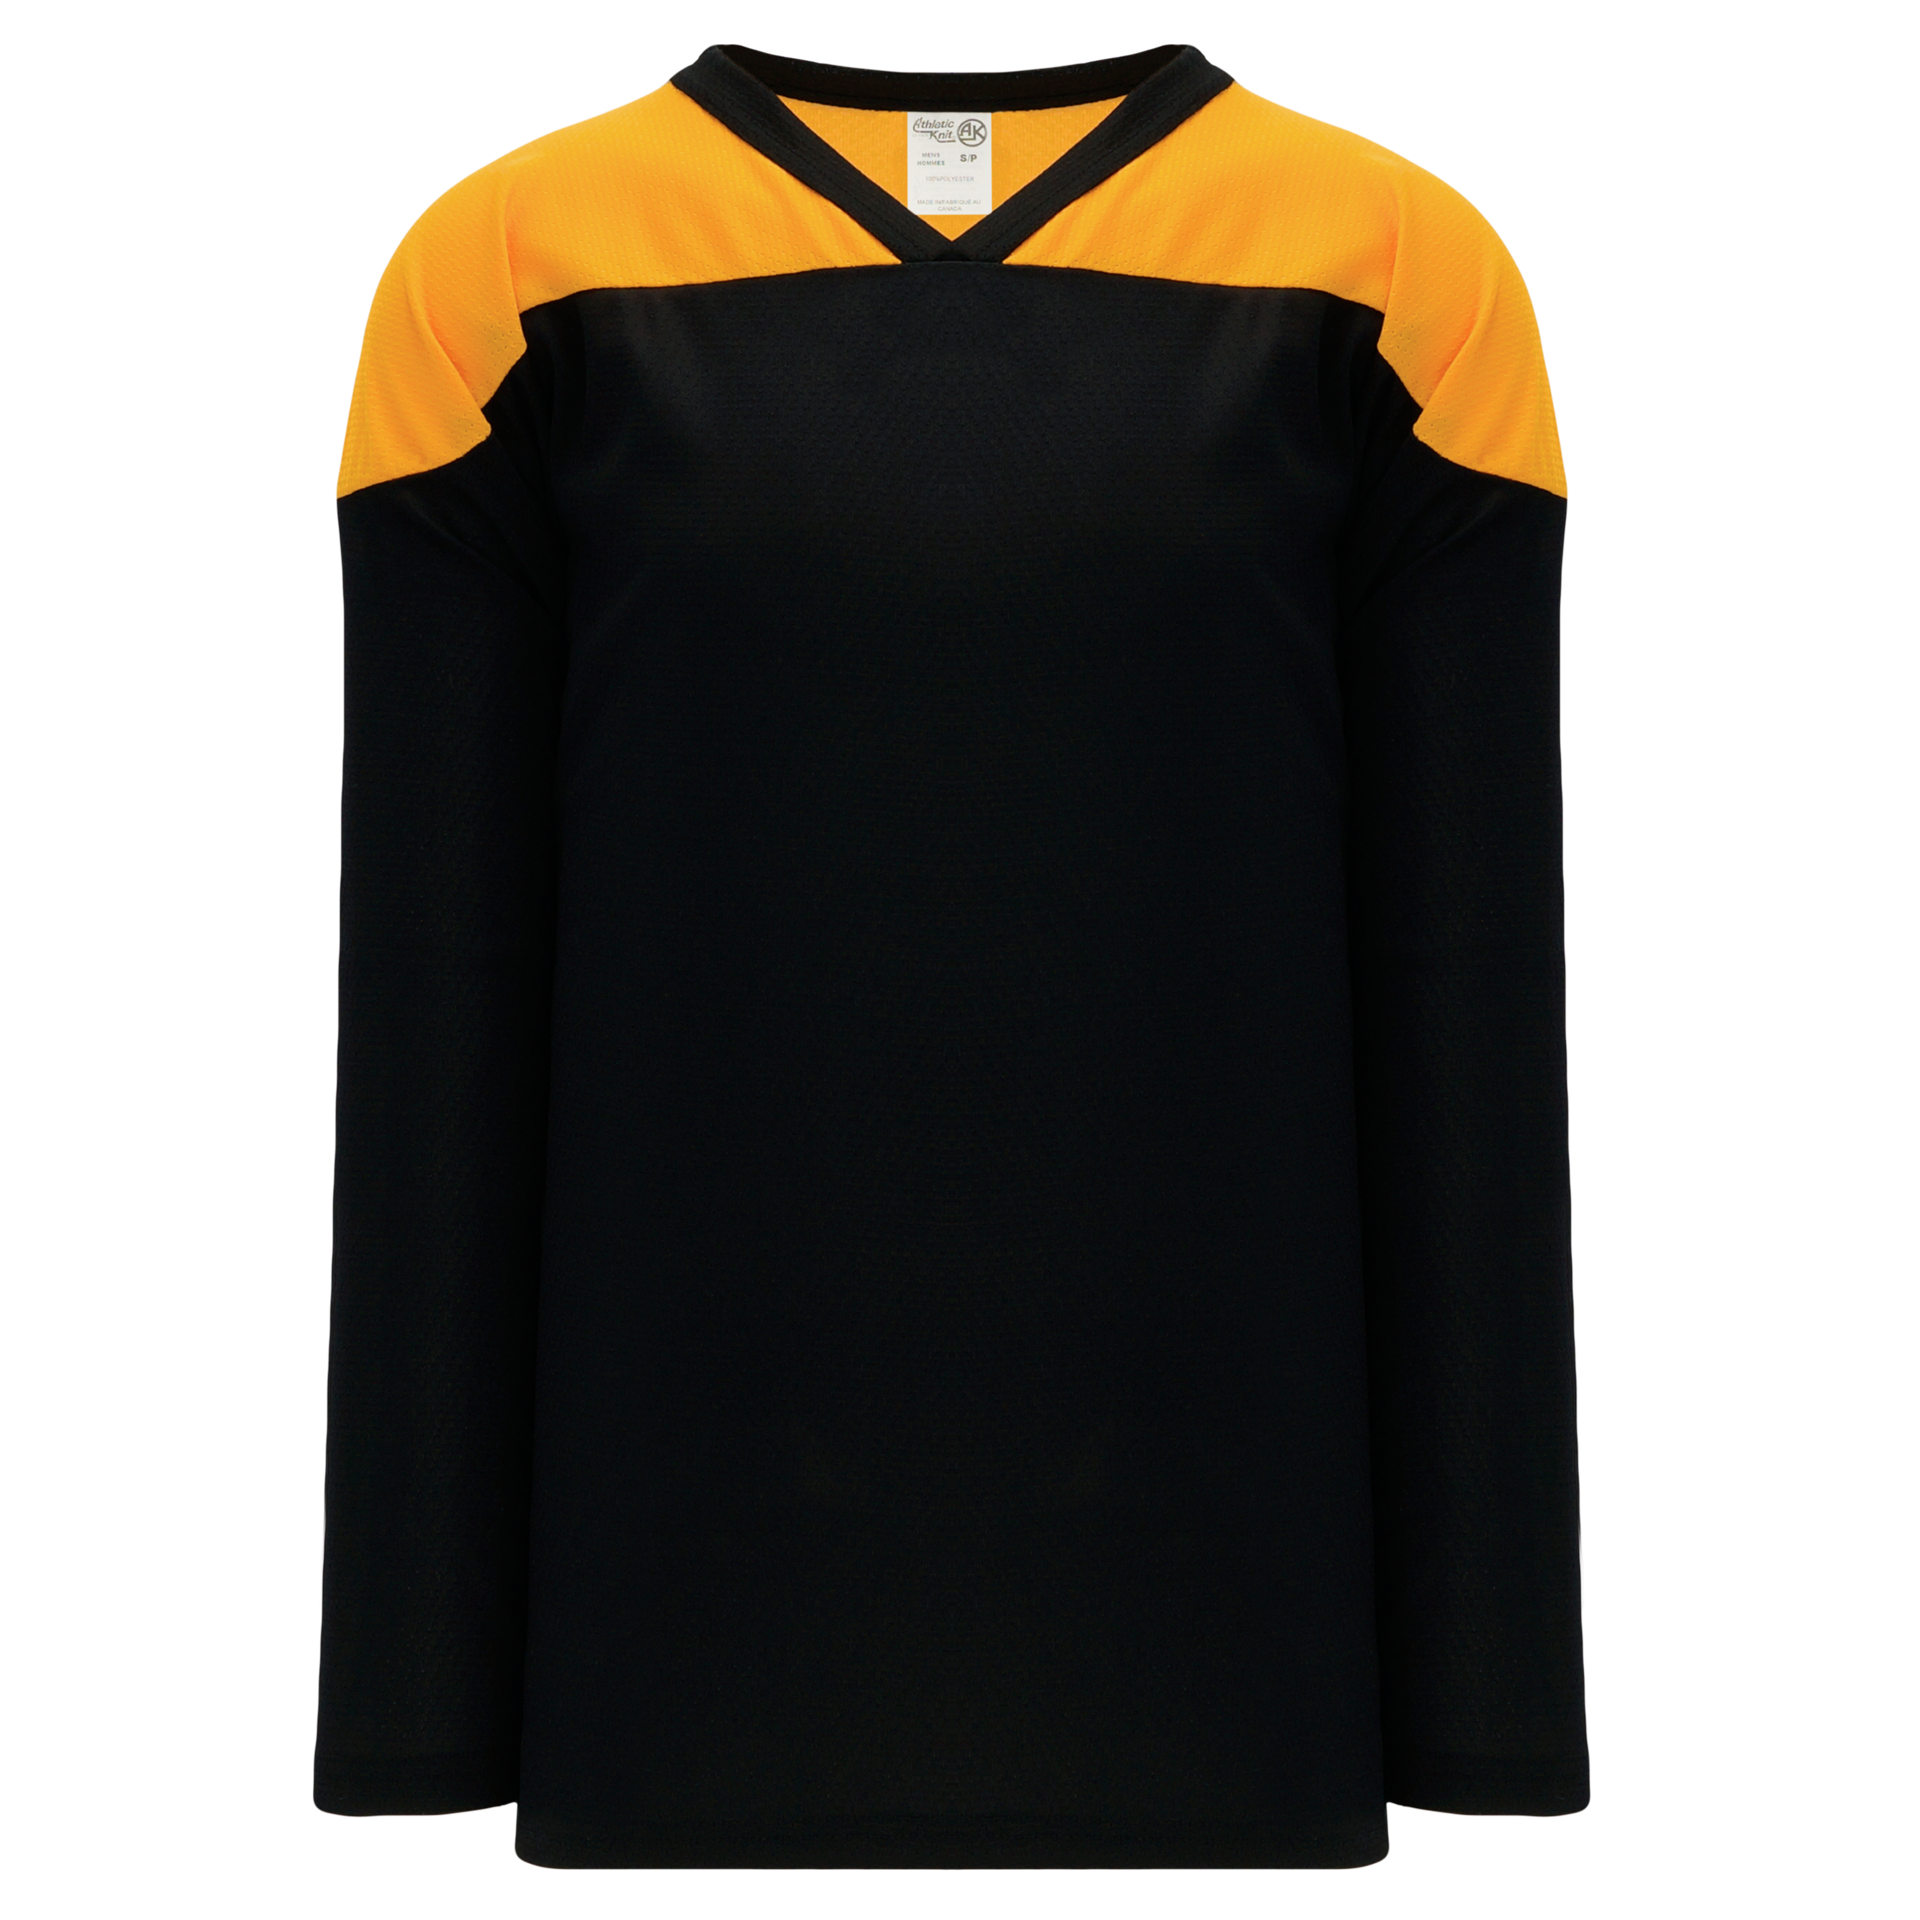 H7500-437 Black/Gold/White League Style Blank Hockey Jerseys Adult XL